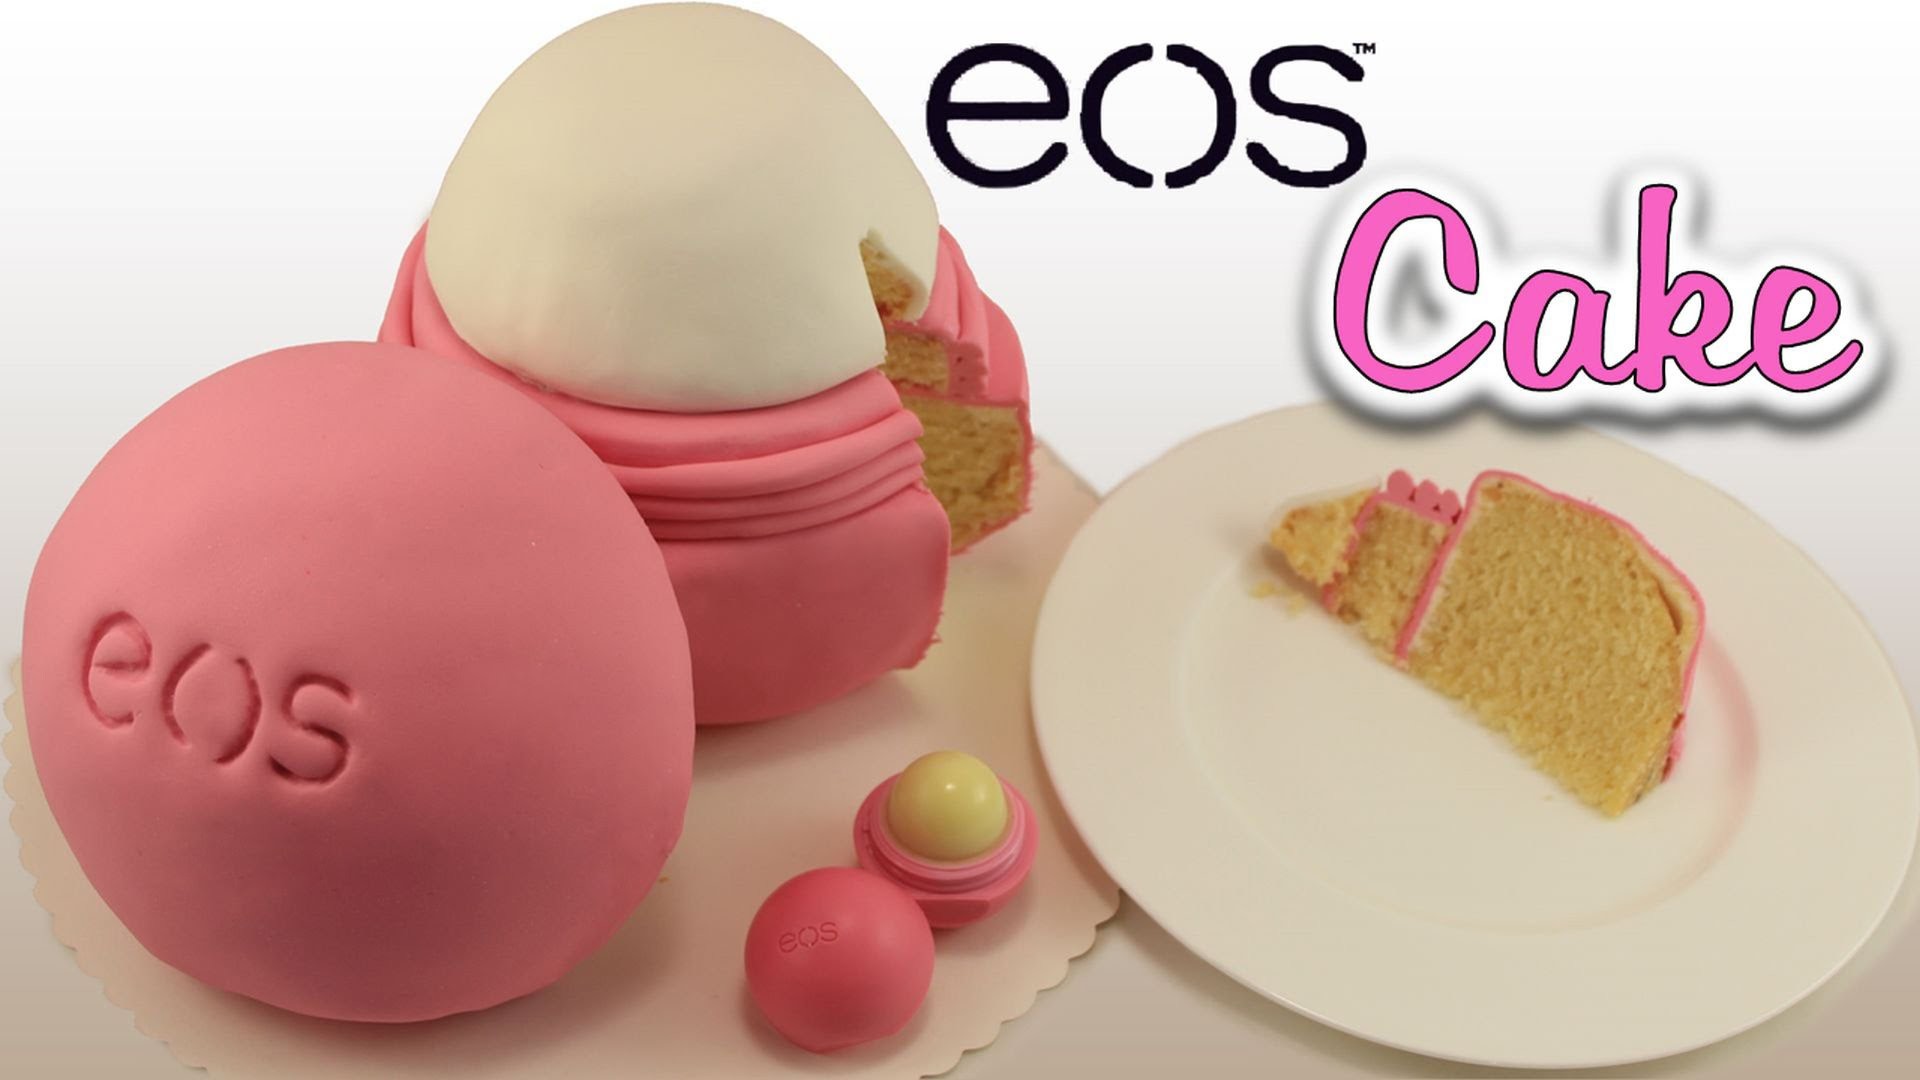 DIY Giant EOS Lip Balm Cake | EOS Kuchen backen | How to make an EOS Cake